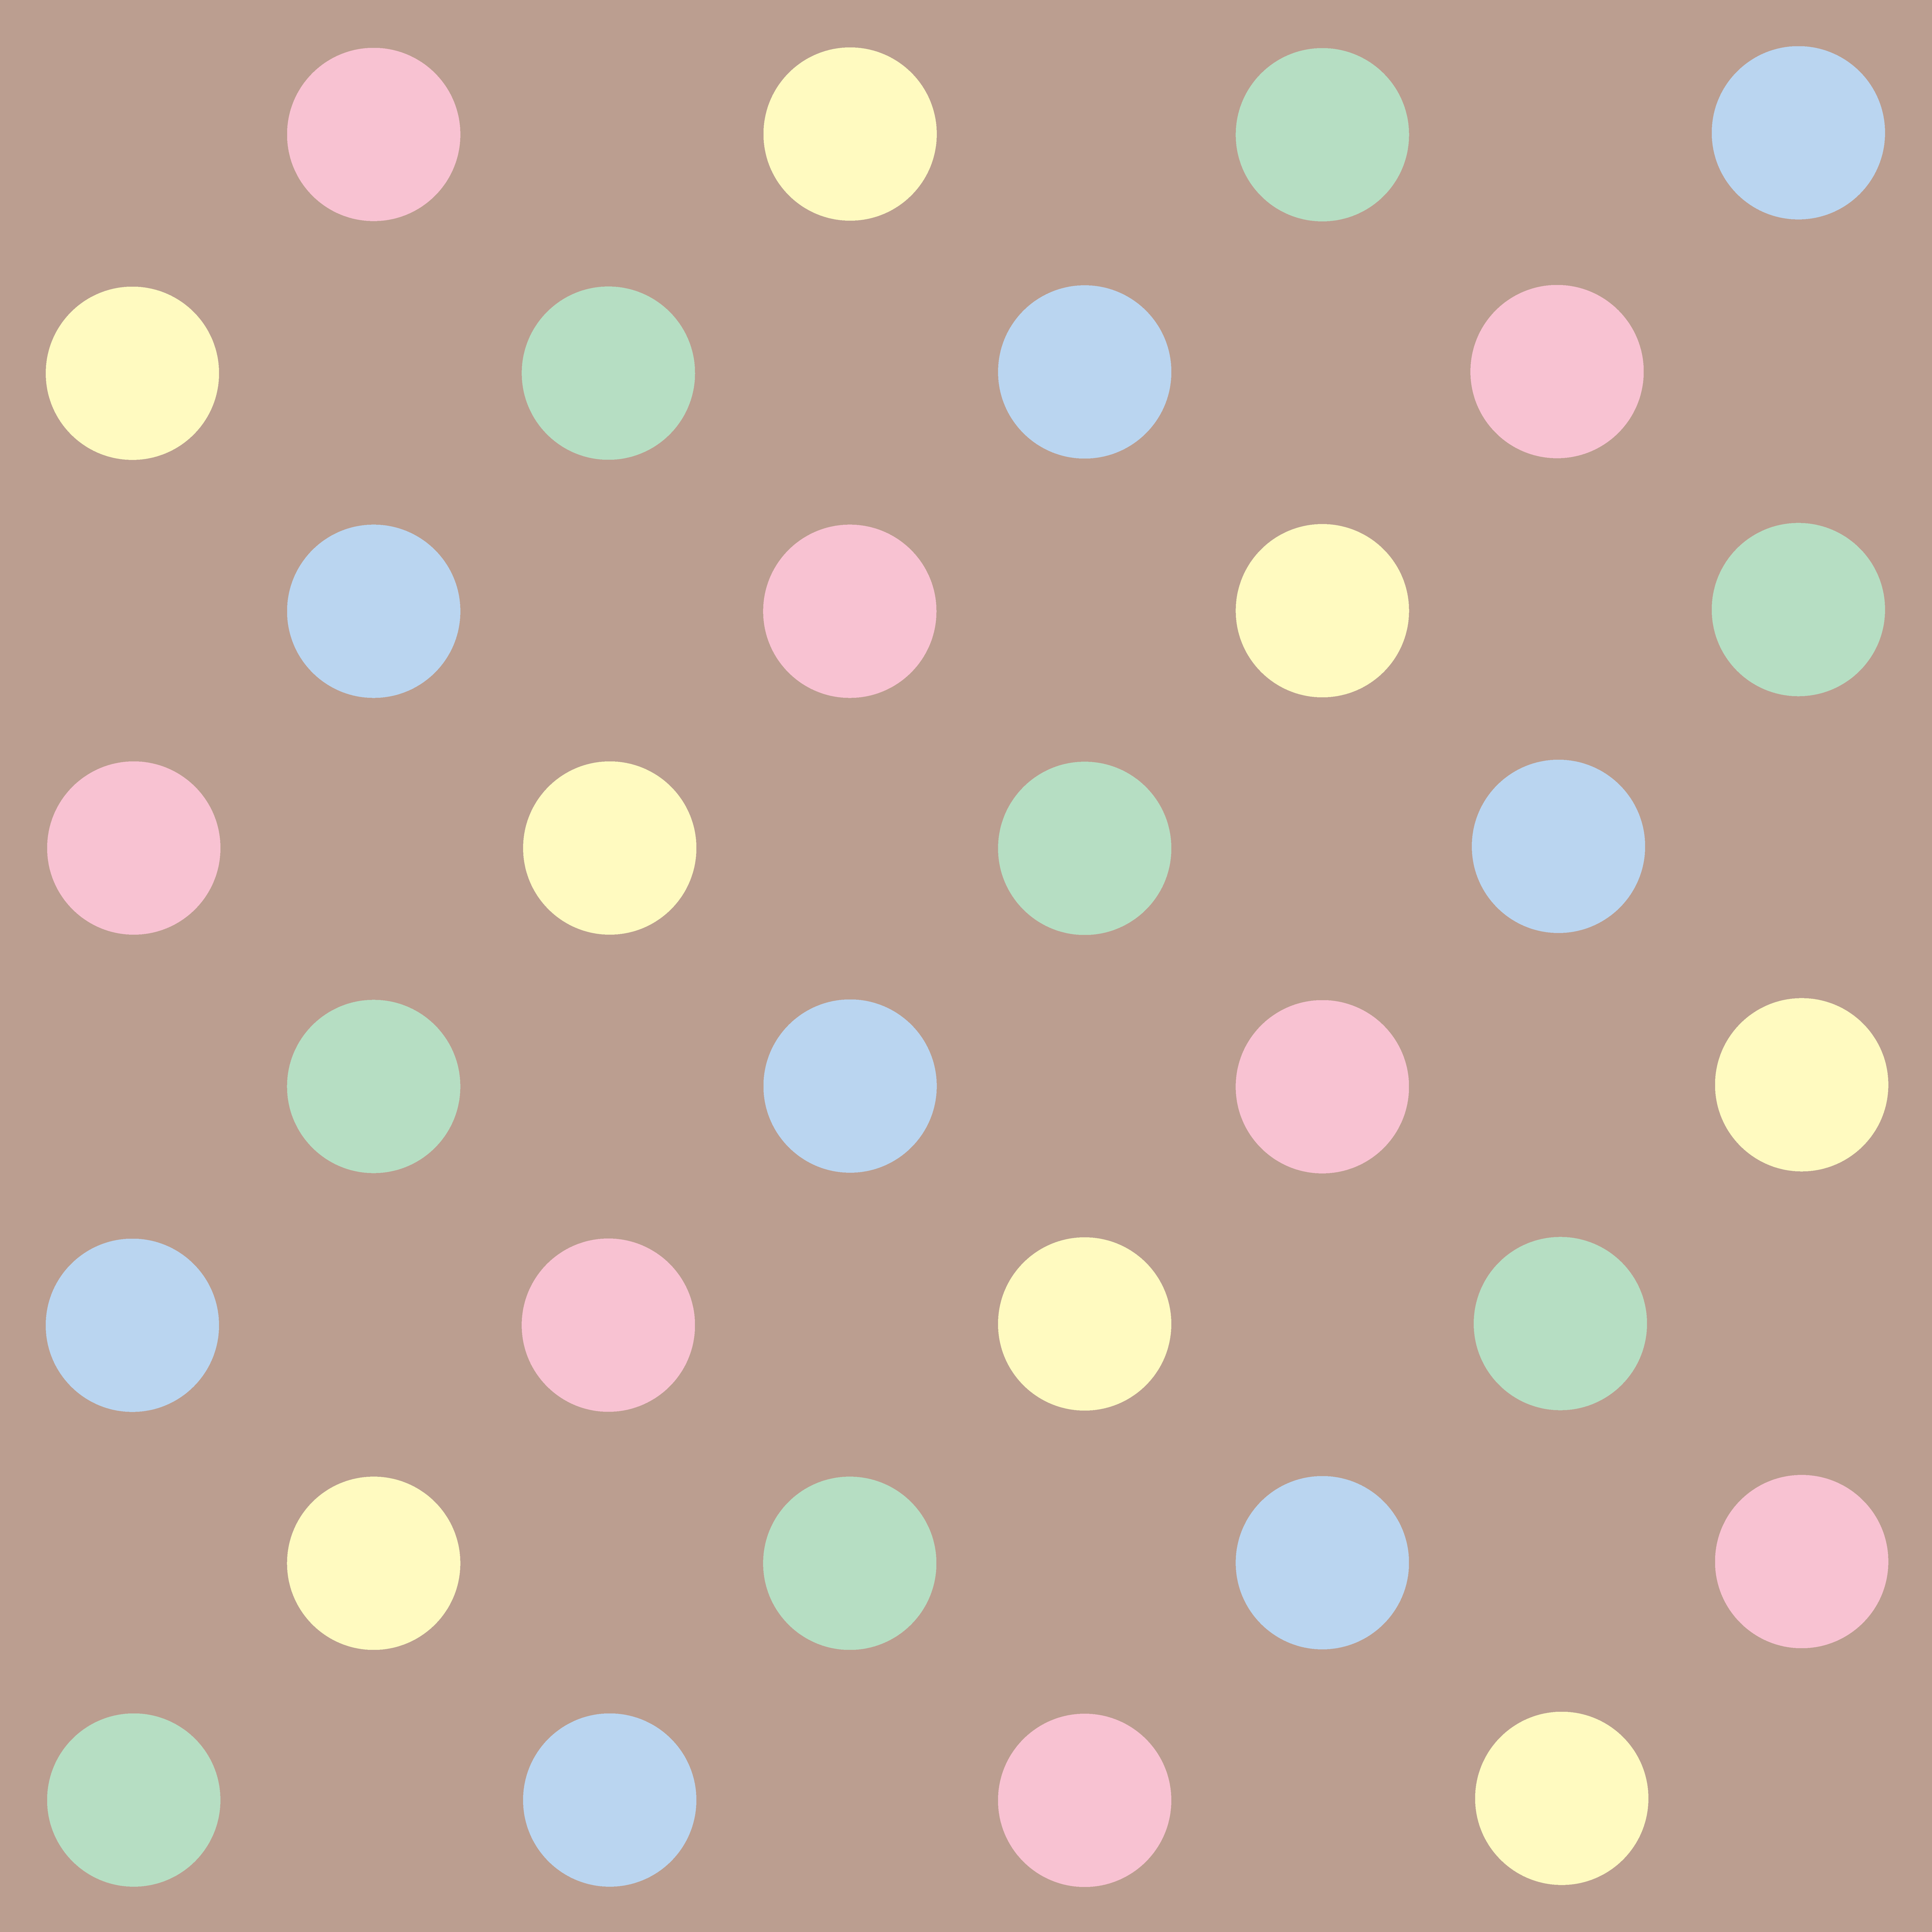 Free Rainbow Polka Dot Wallpaper, Download Free Clip Art, Free Clip